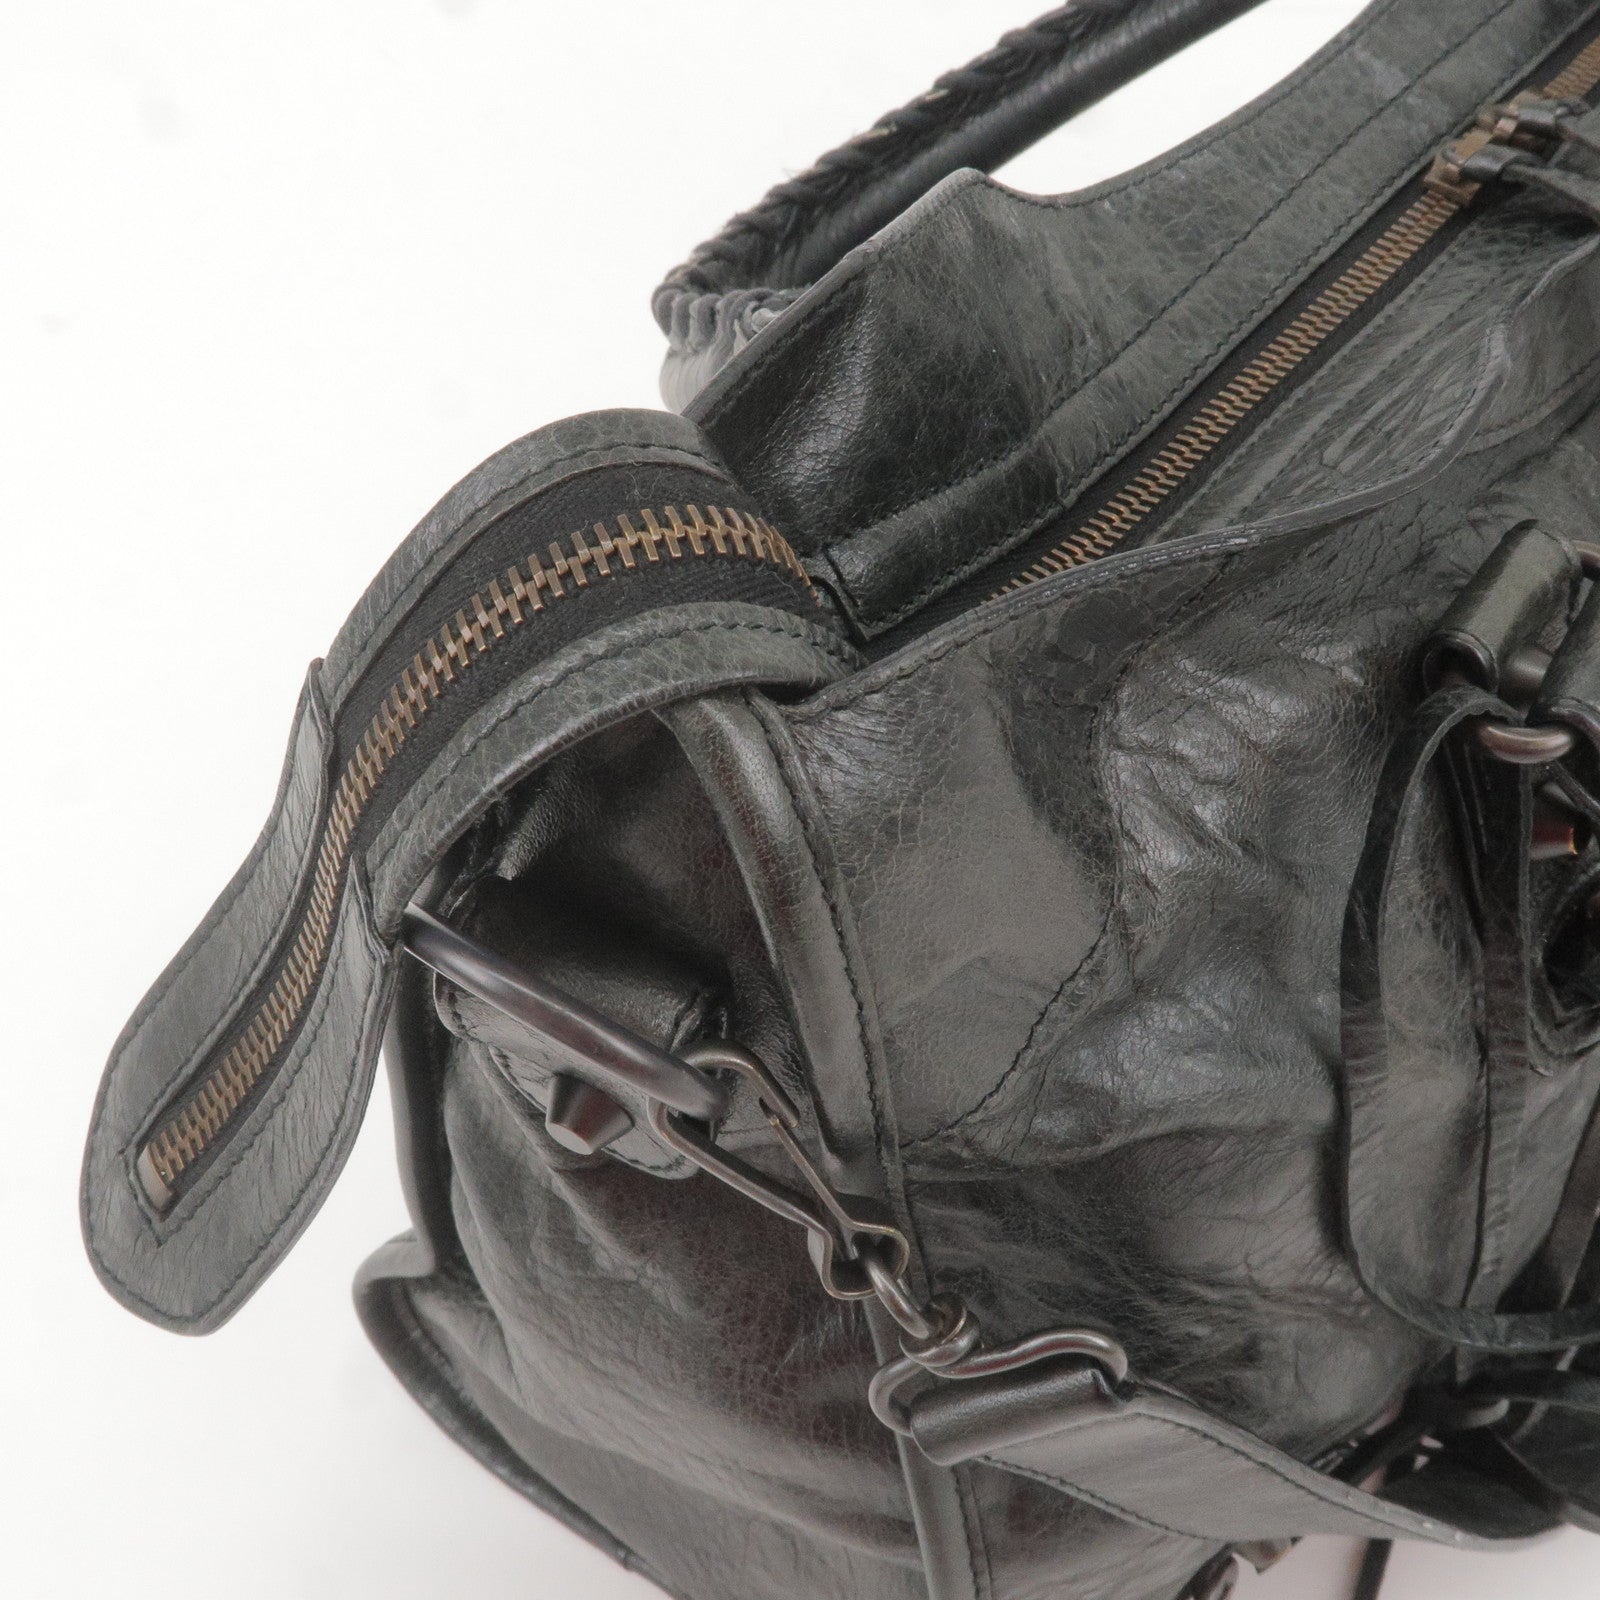 Balenciaga The City Leather 2way handbag Green 115748 With mirror